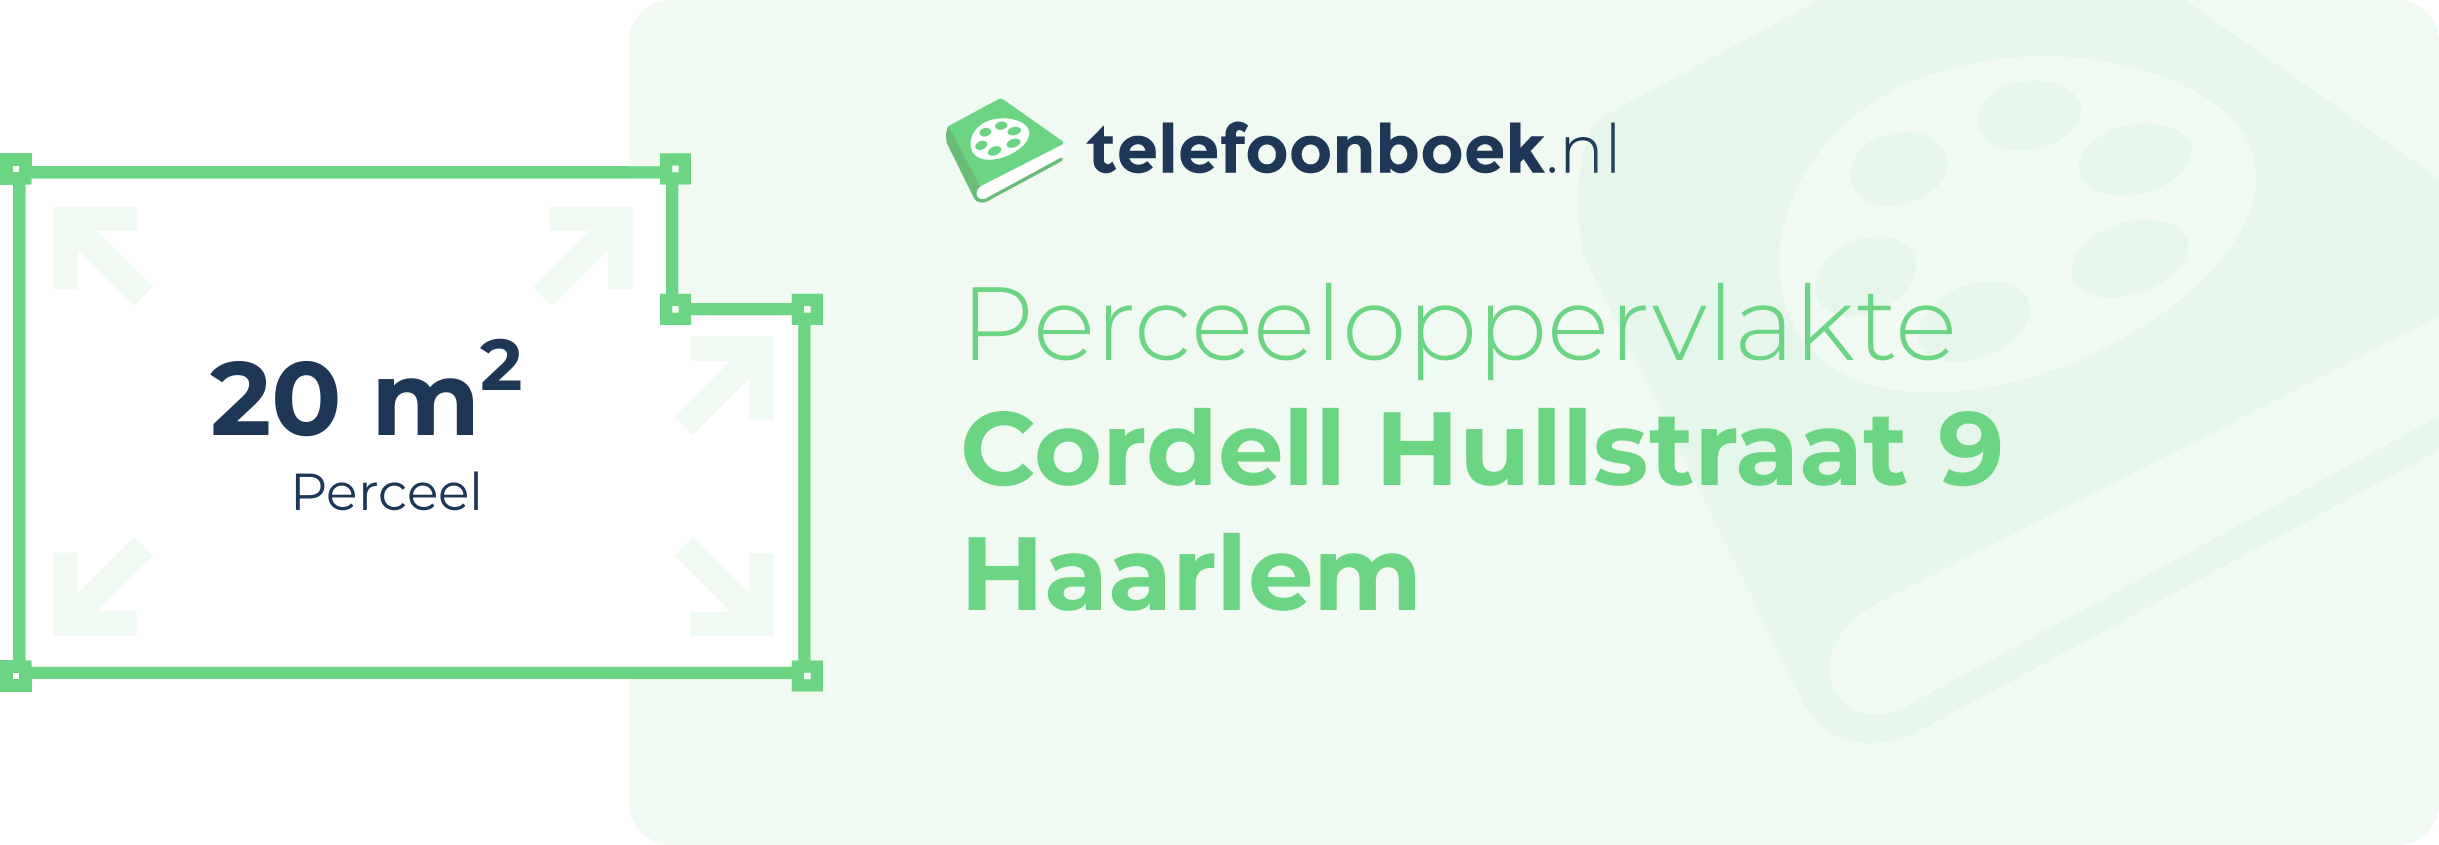 Perceeloppervlakte Cordell Hullstraat 9 Haarlem